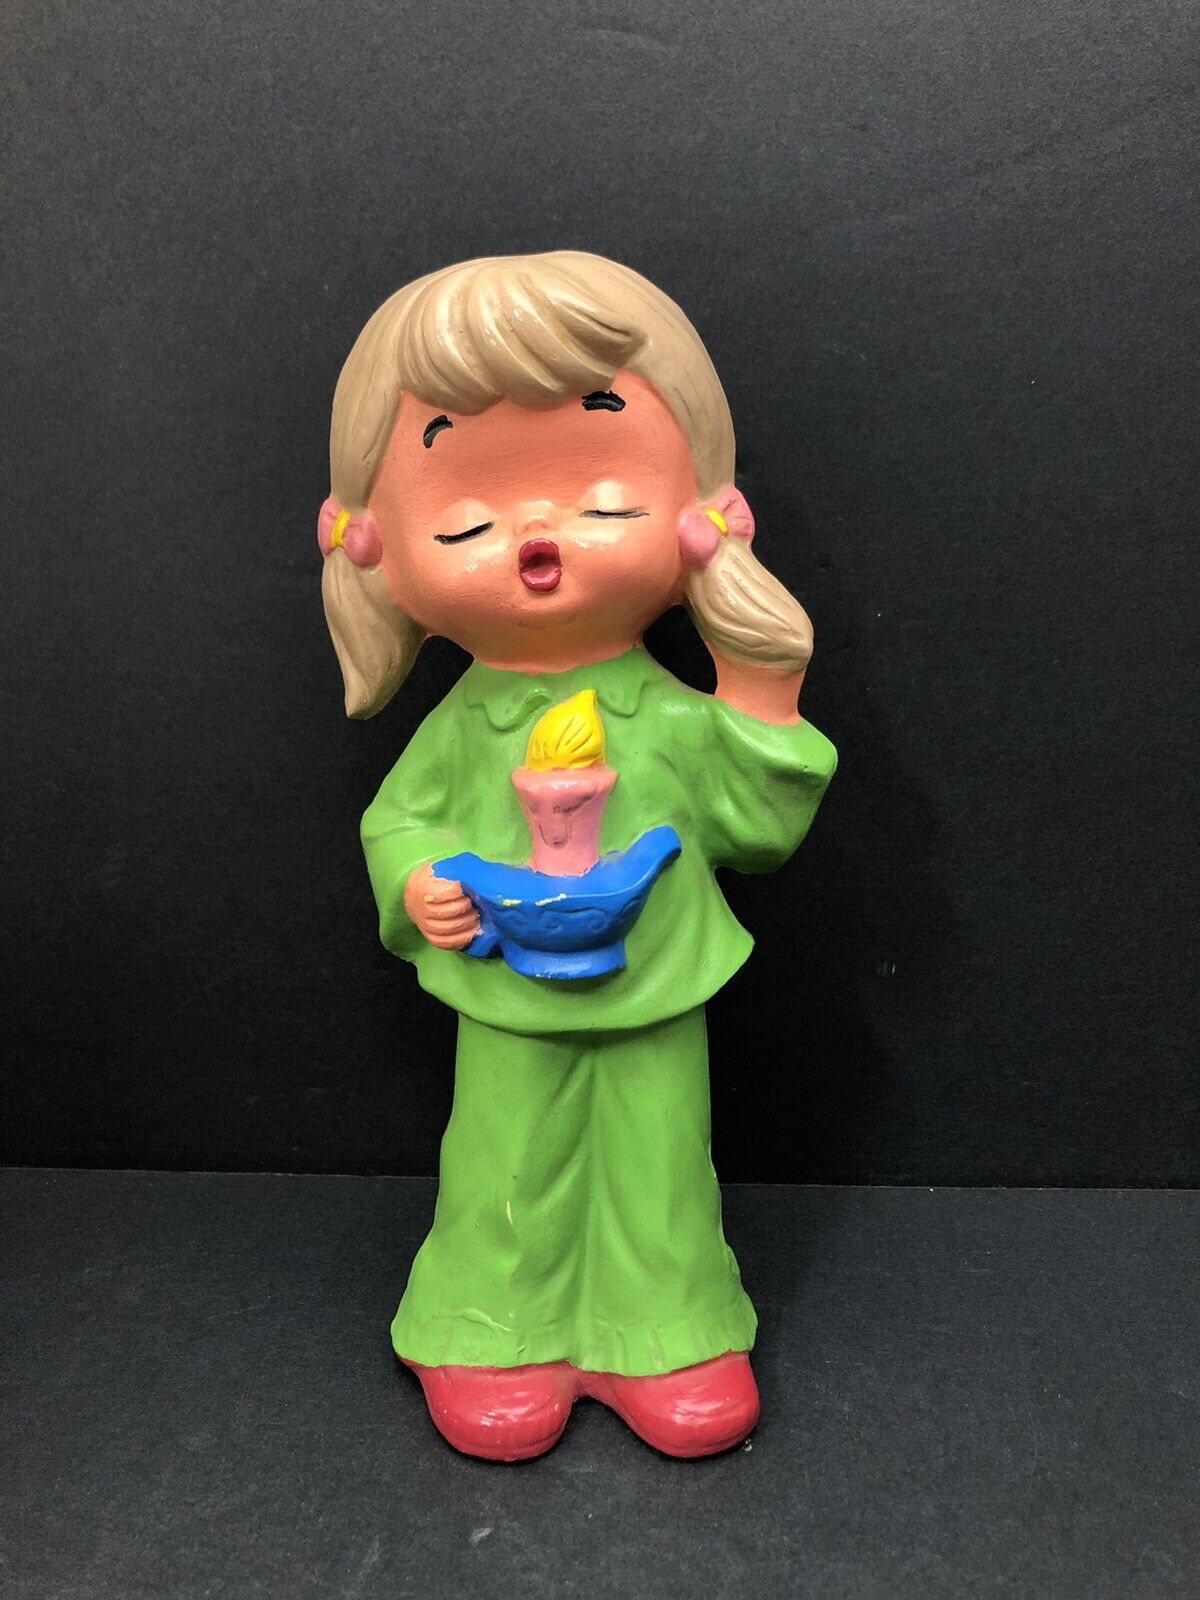 70’s Vtg Ceramic Retro Painter Singing Girl Holding Candle figurine